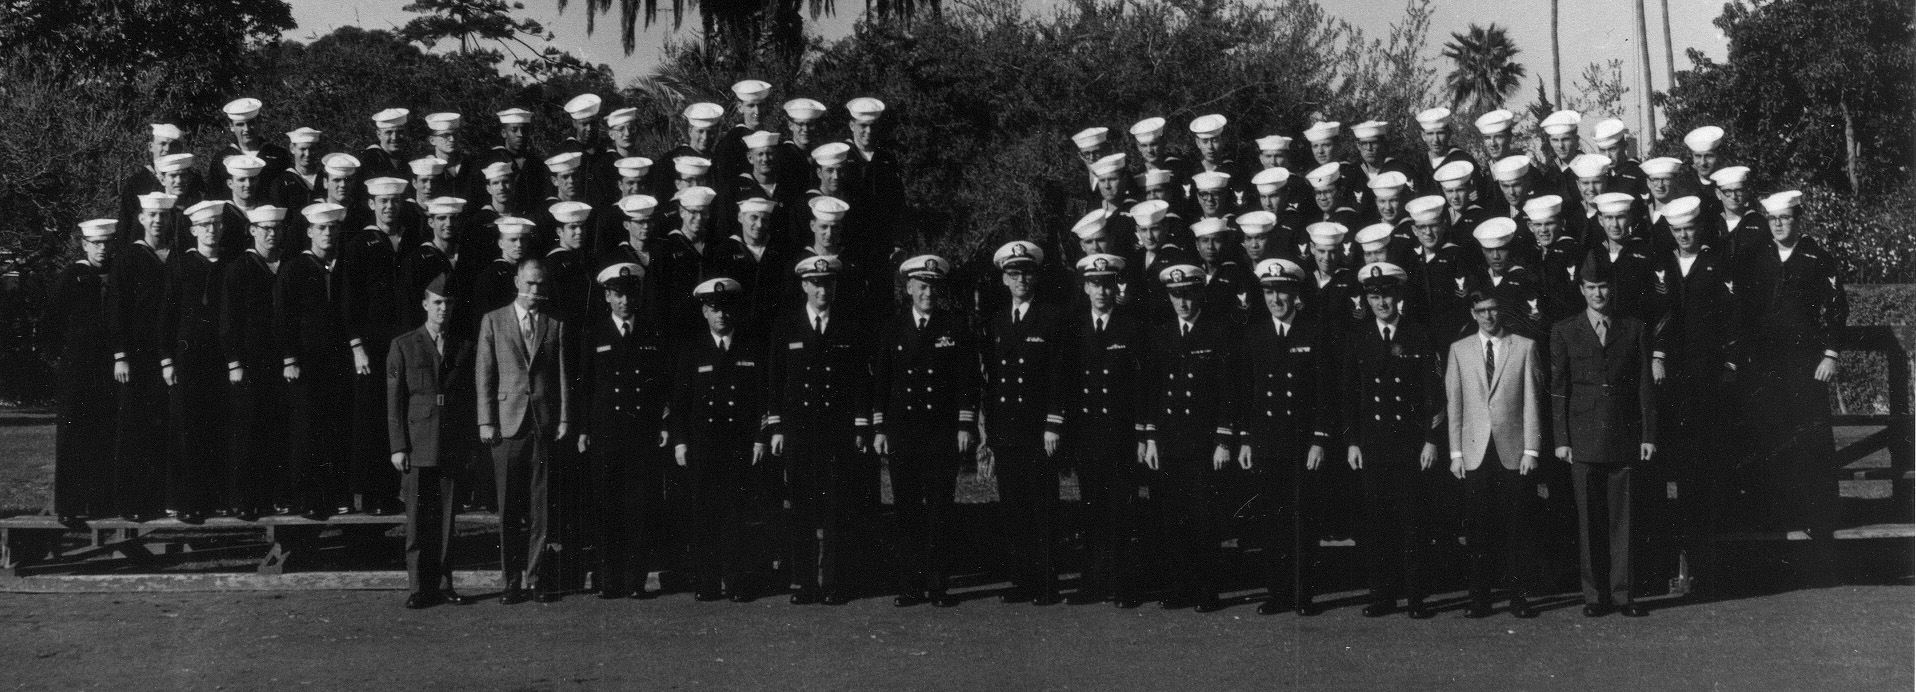 File:USS Pueblo crew (January 1969).jpg - Wikimedia Commons